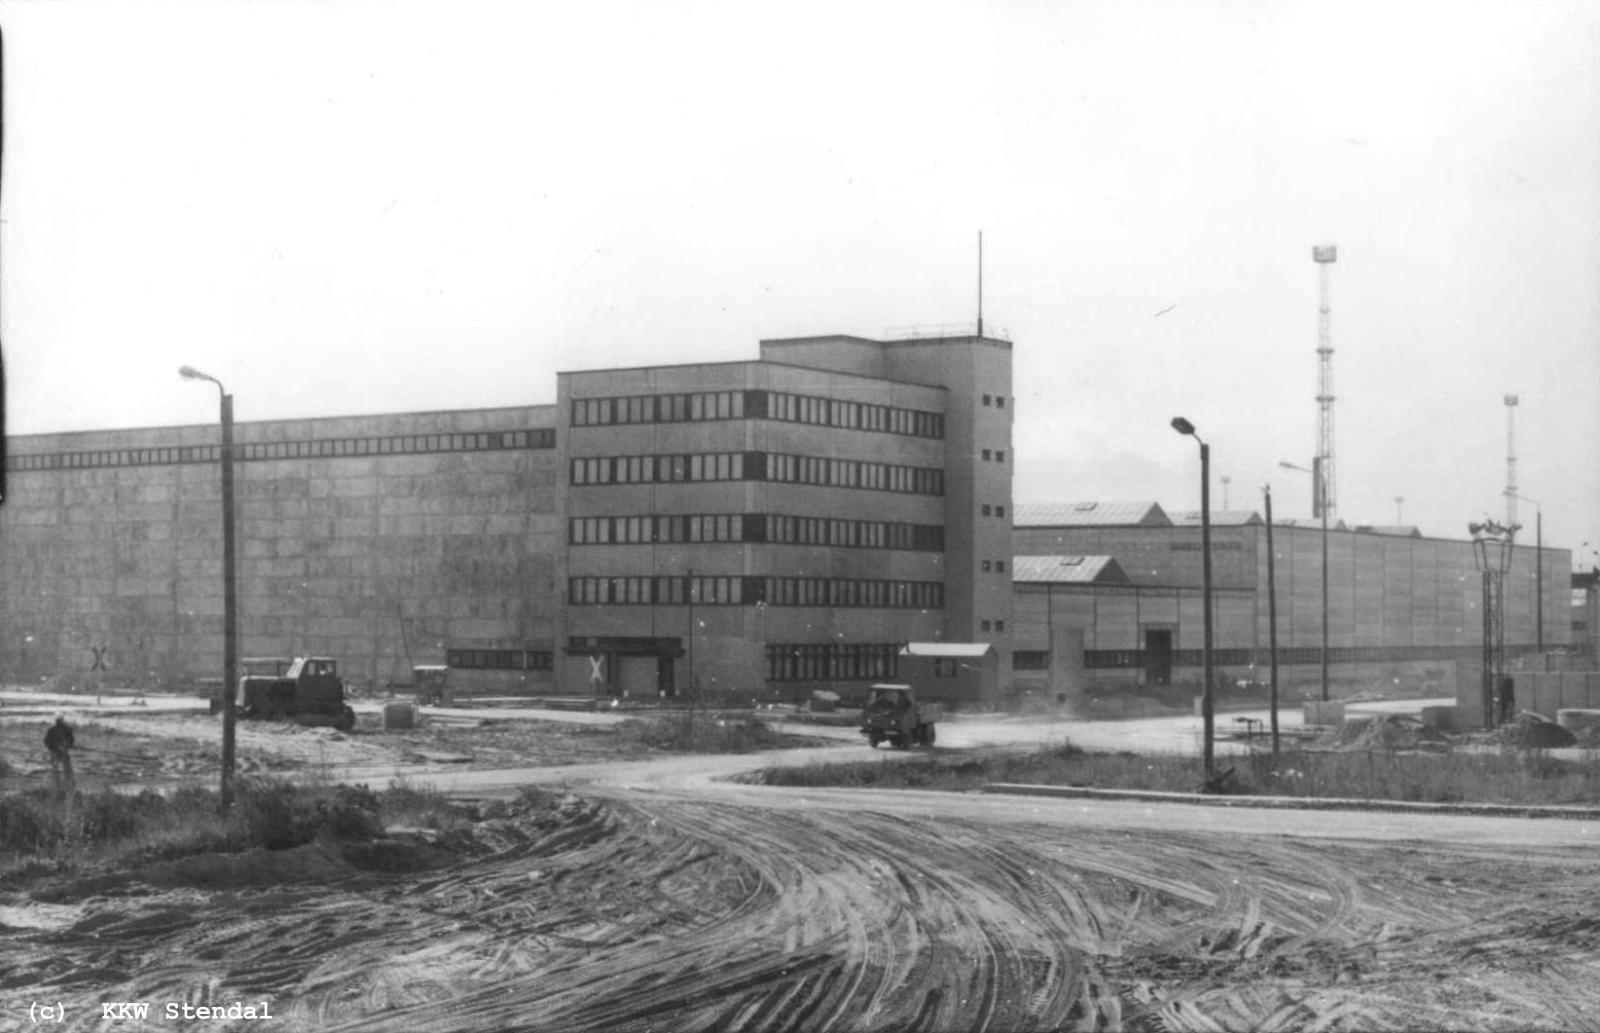  AKW Stendal, Baustelle 1988,Inaktive Werkstatt: Werkstatt - Lager - Komplex  